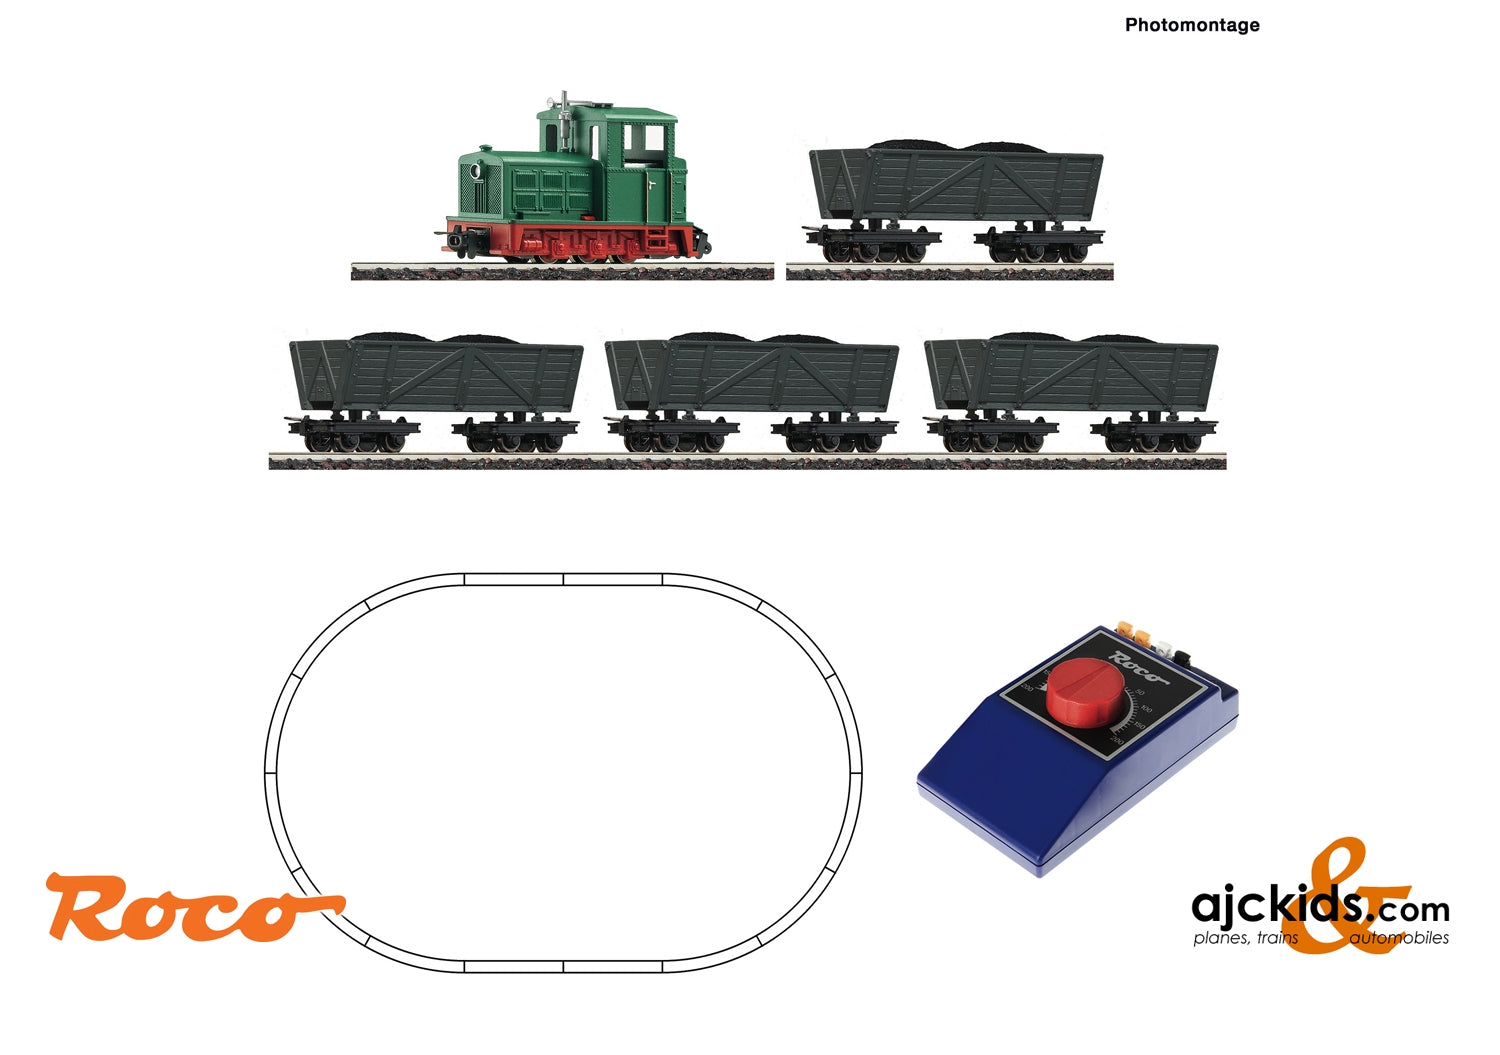 Roco 31034 - Analogue start set: Light railway diesel locomotive
with tipper wagon train